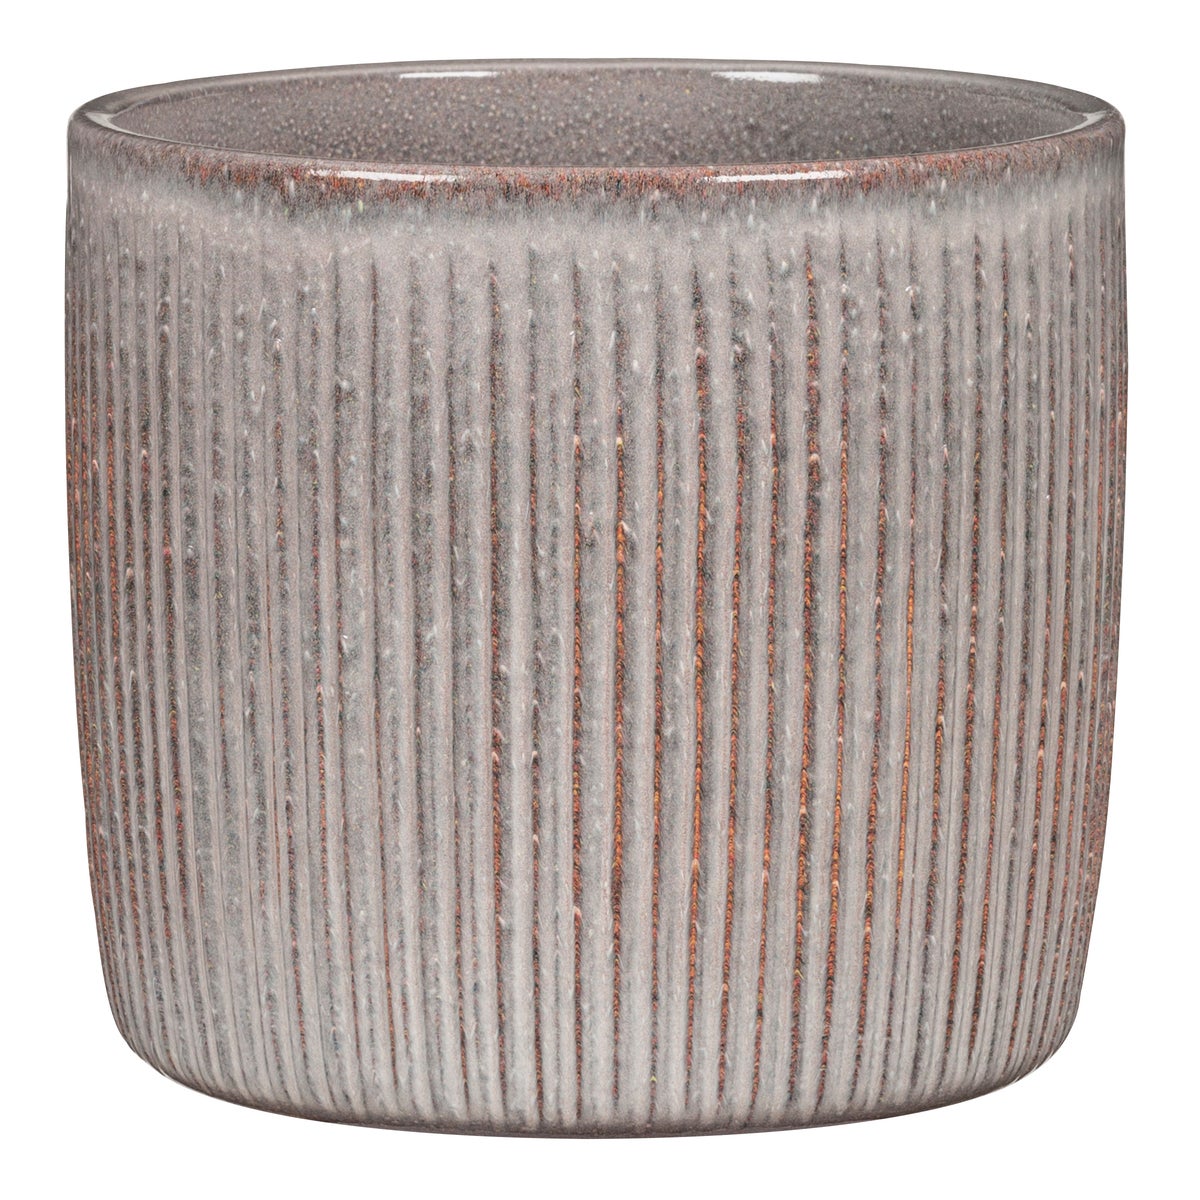 Scheurich Solido Linea, Blumentopf aus Keramik,  Farbe: Seashell, 21,2 cm Durchmesser, 19,3 cm hoch, 5,6 l Vol.